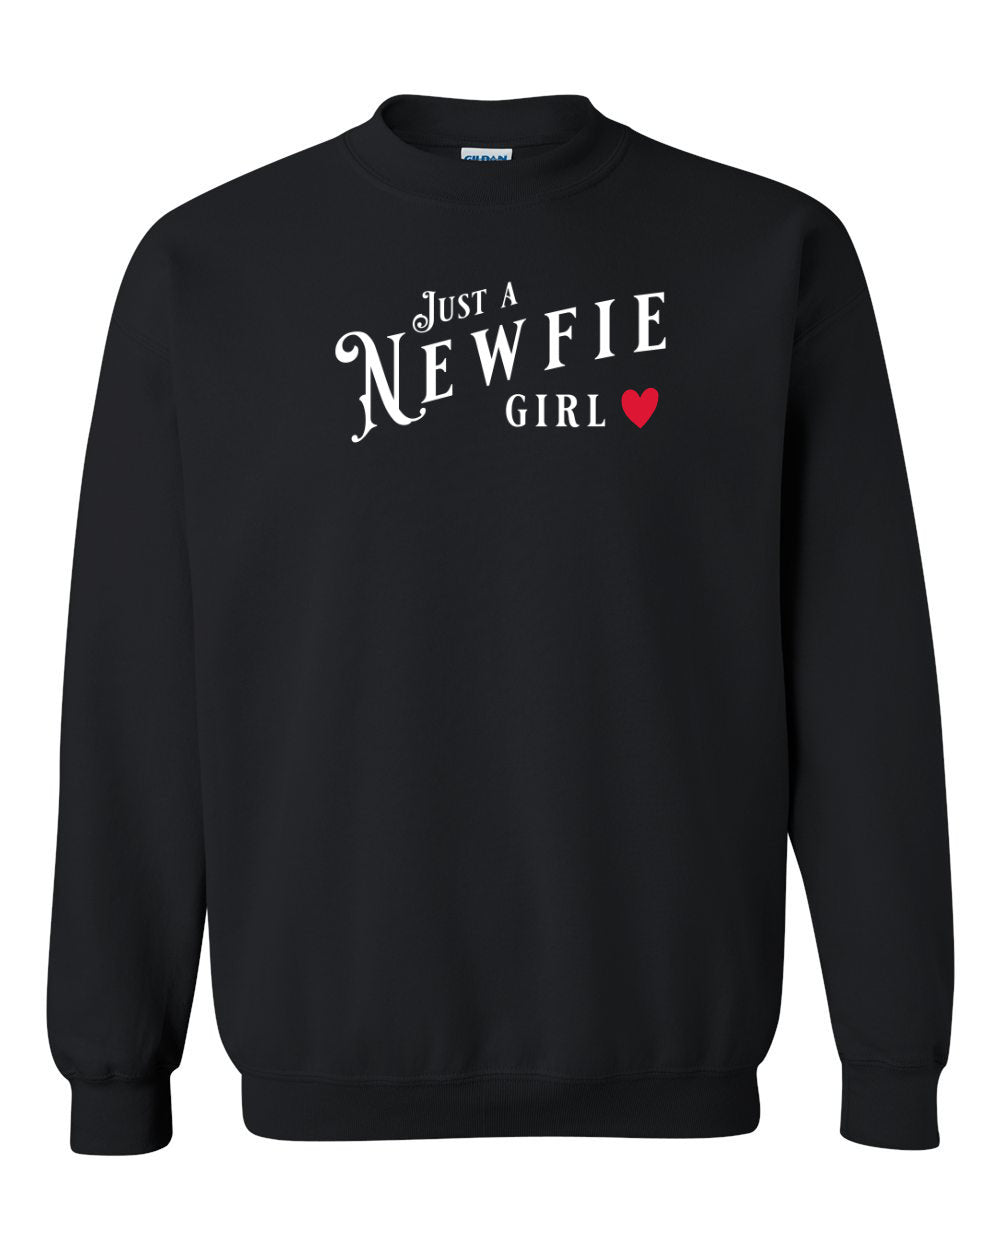 Just a Newfie Girl Sweatshirt